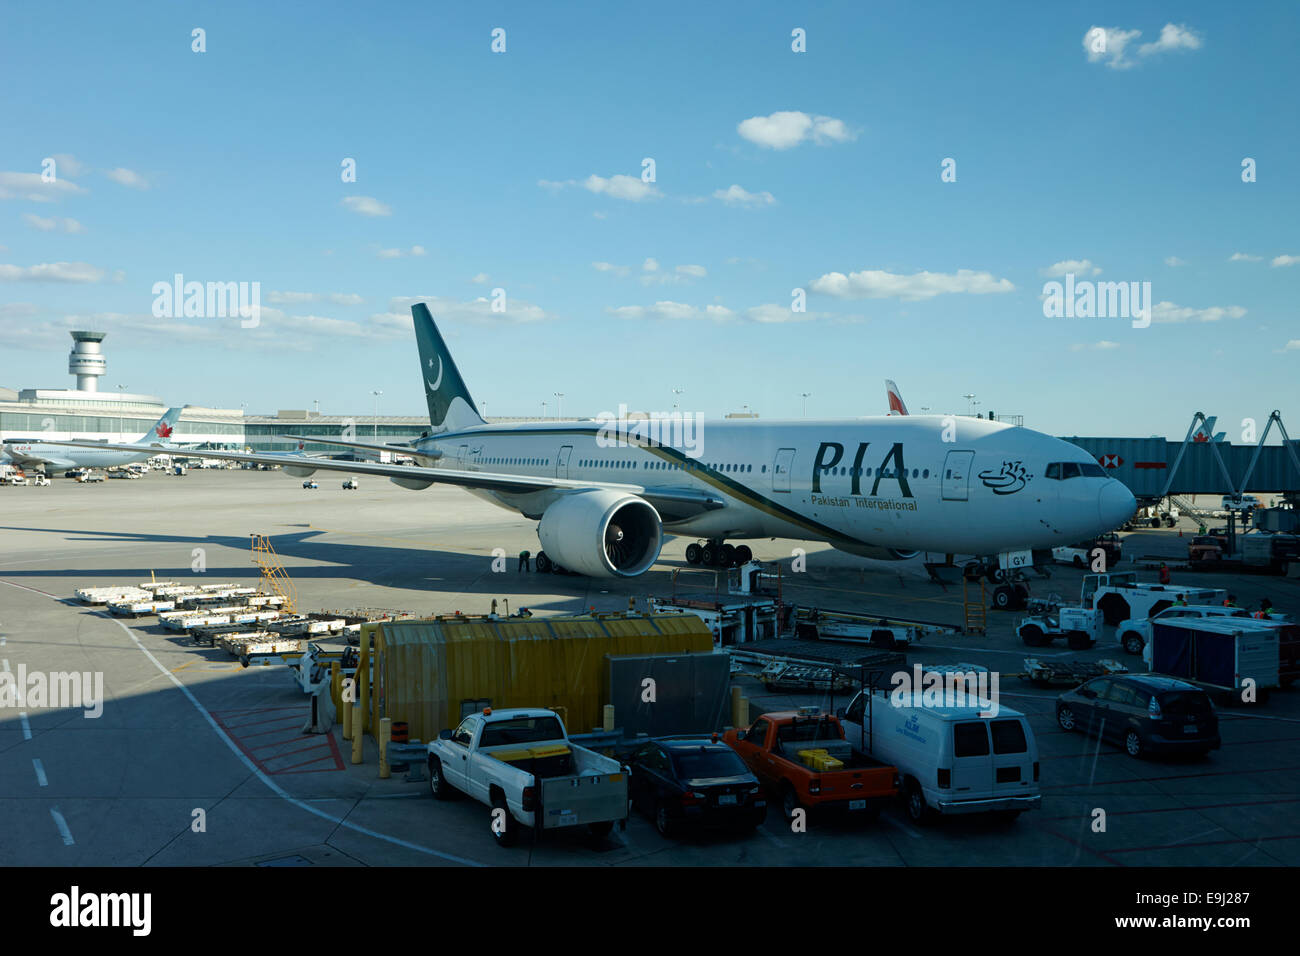 pakistan international airlines aircraft at terminal 3 toronto pearson international airport Canada Stock Photo